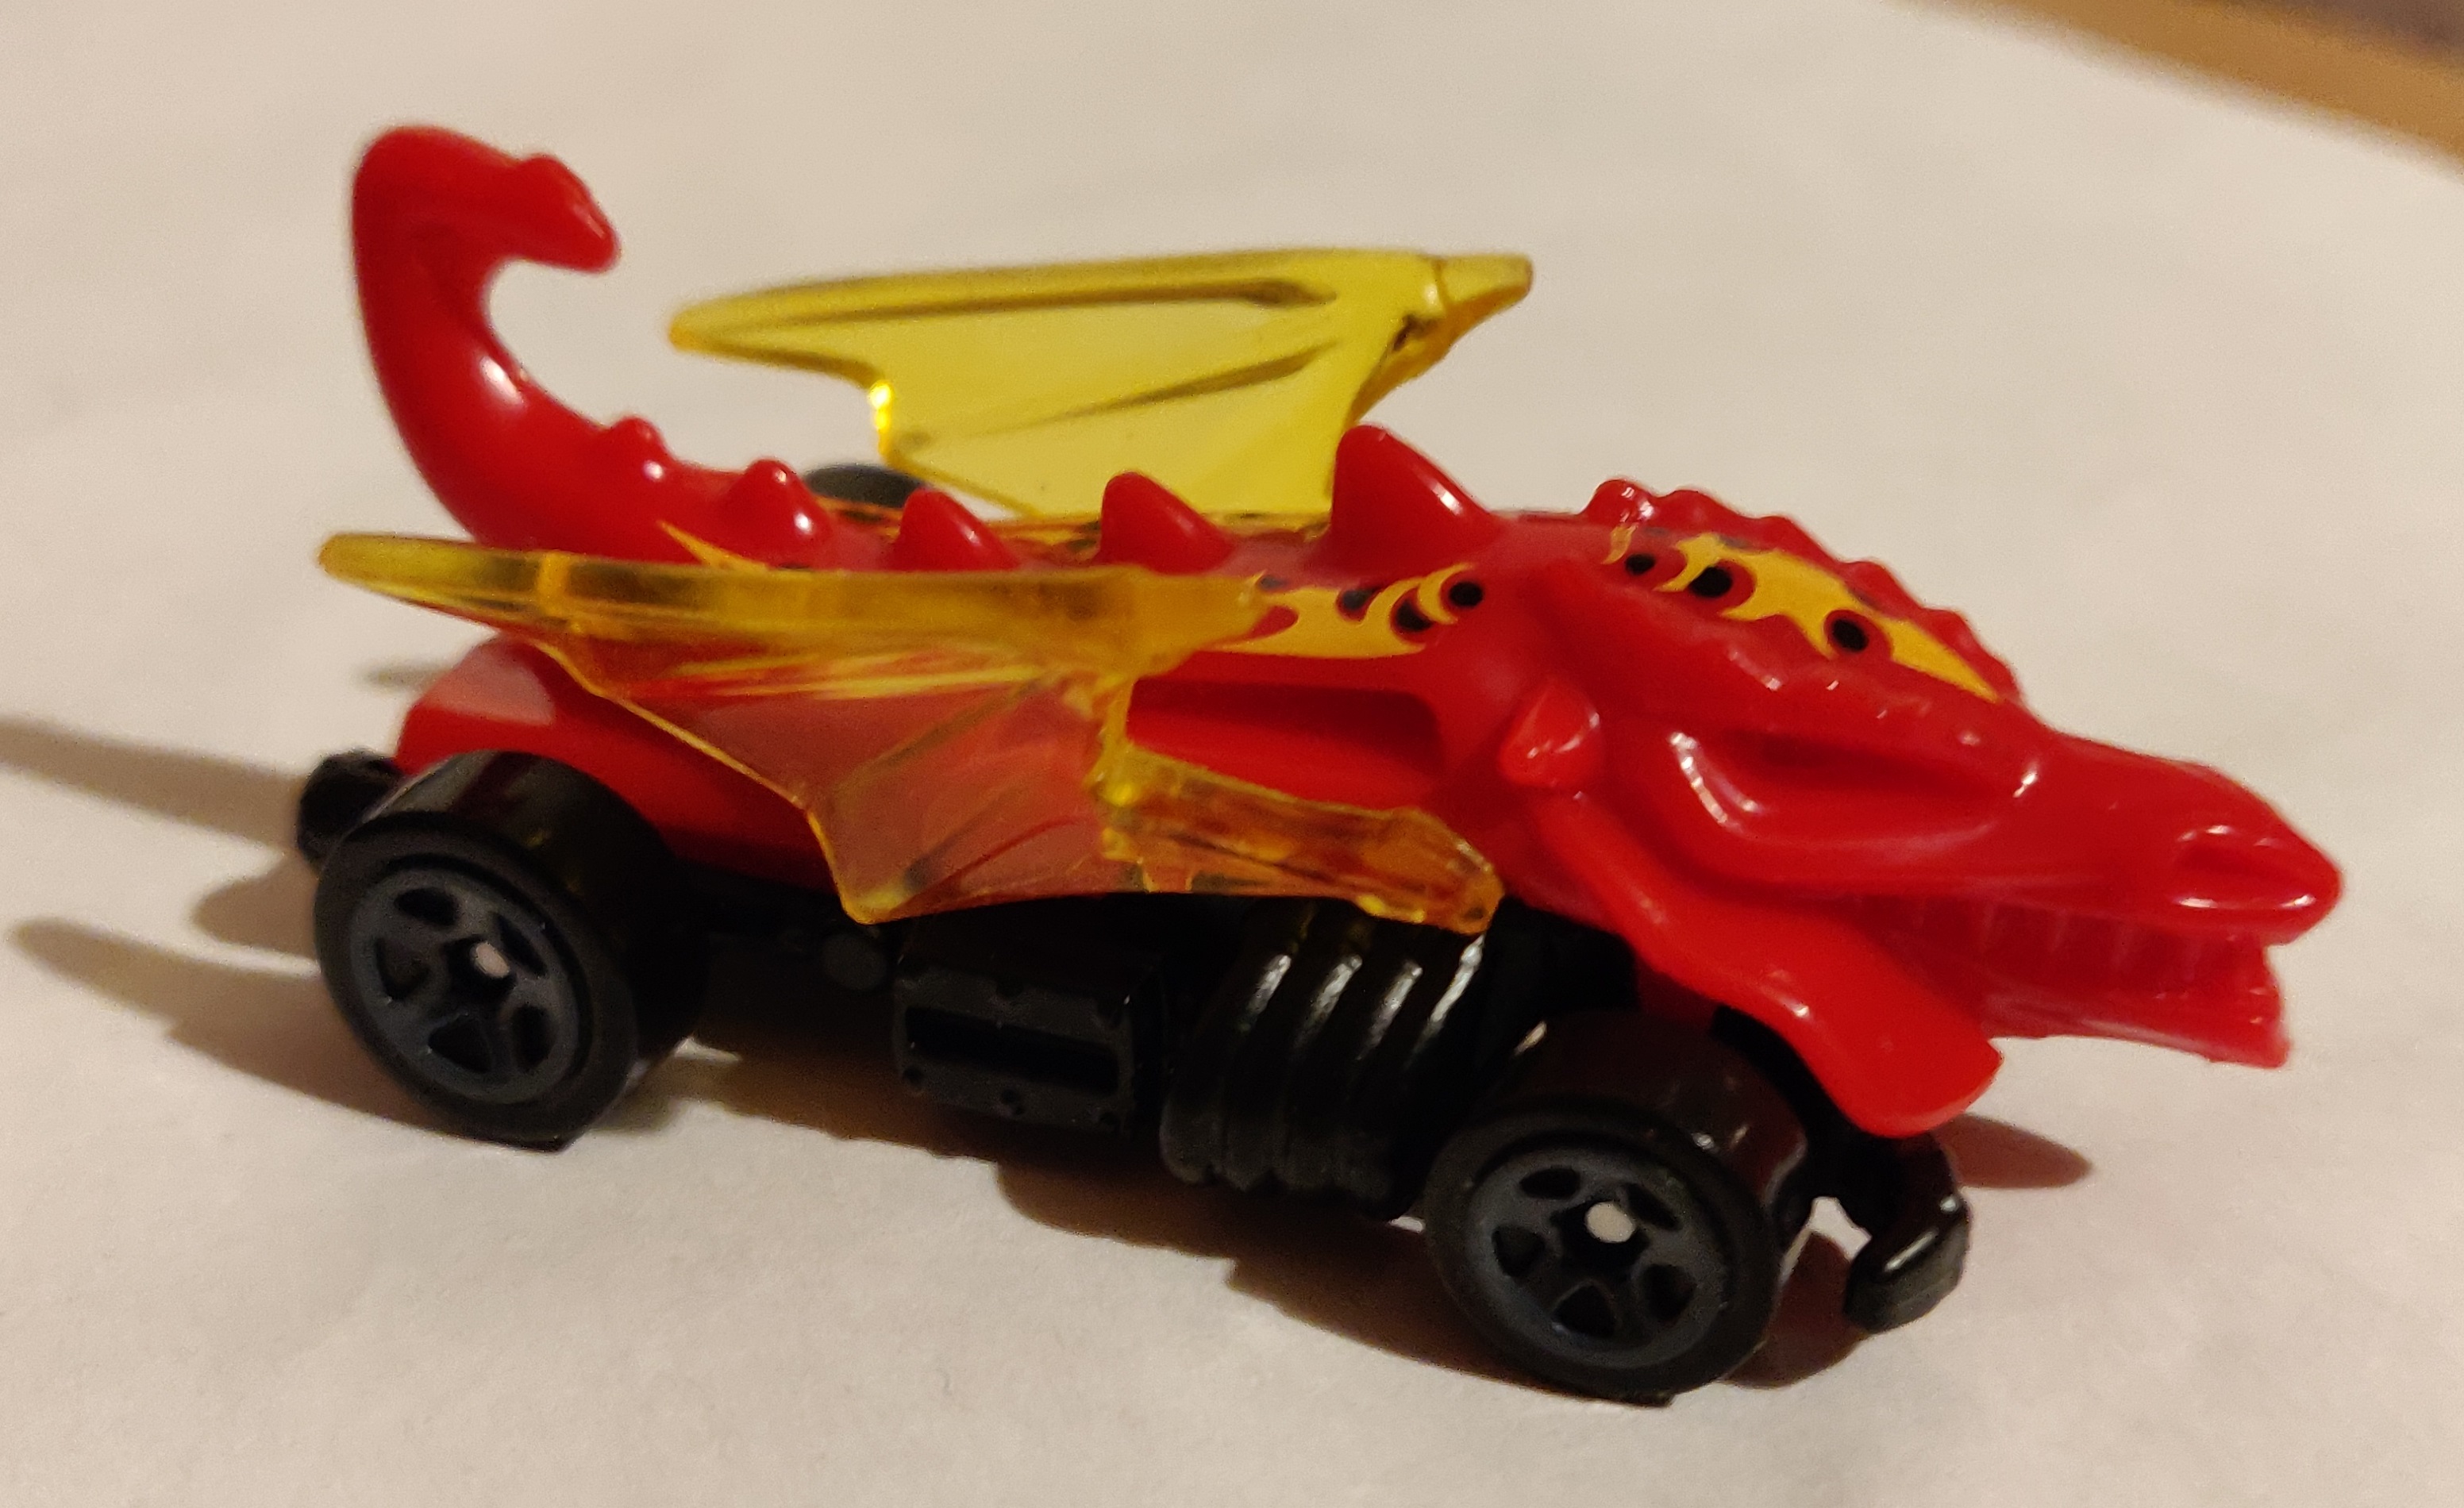 Hot Wheels 2016 Dino Riders Dragon Blaster (Dragon Car) 247/250, Red